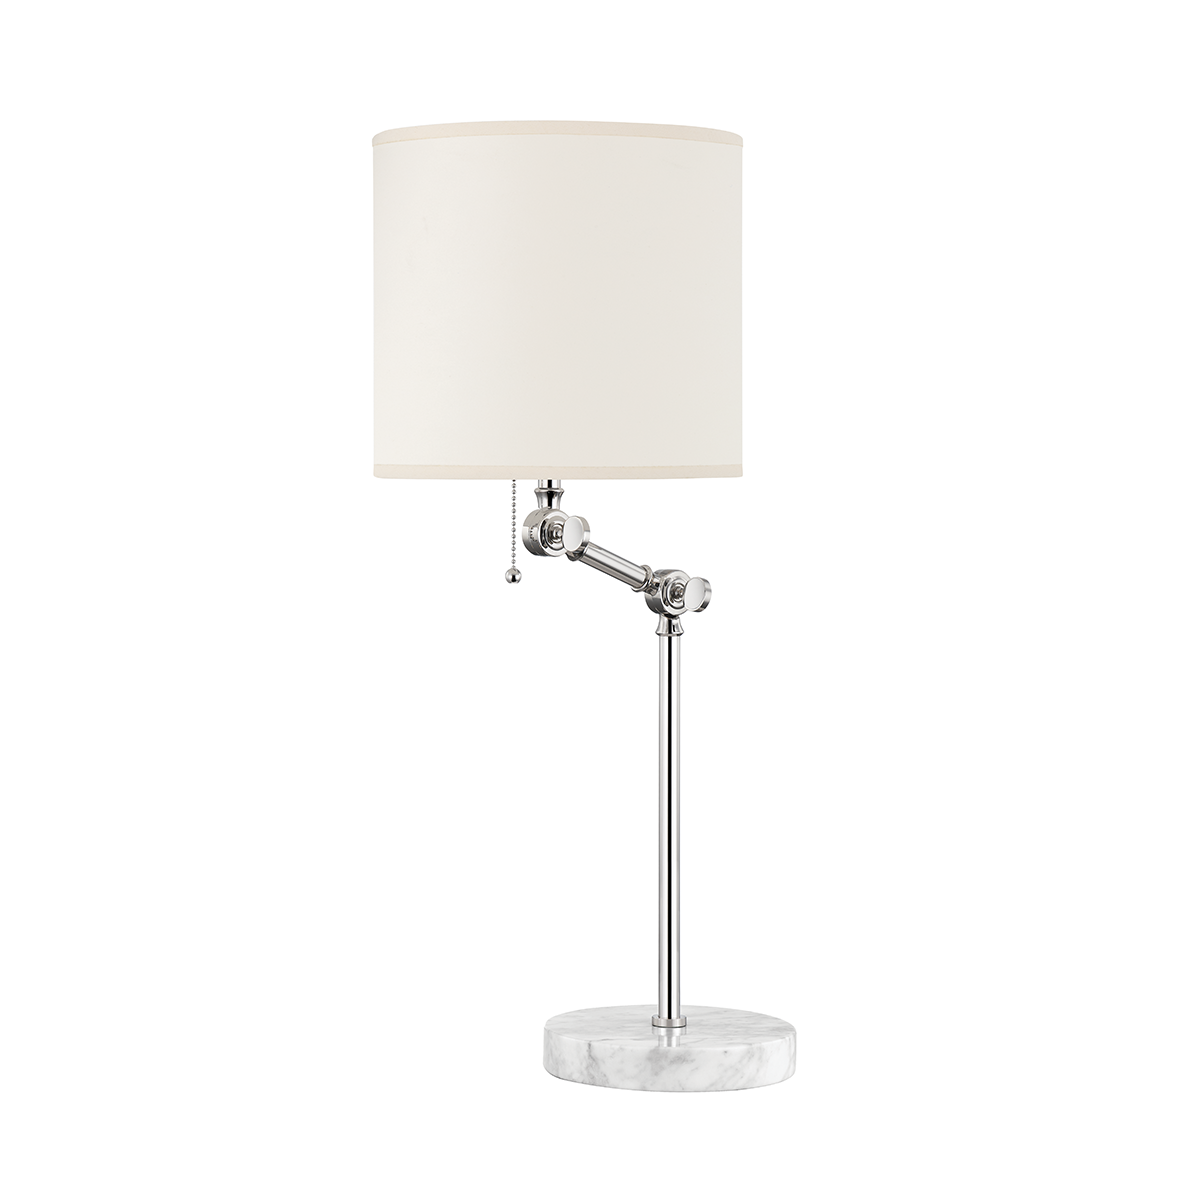 Hudson Valley Lighting Essex Table Lamp